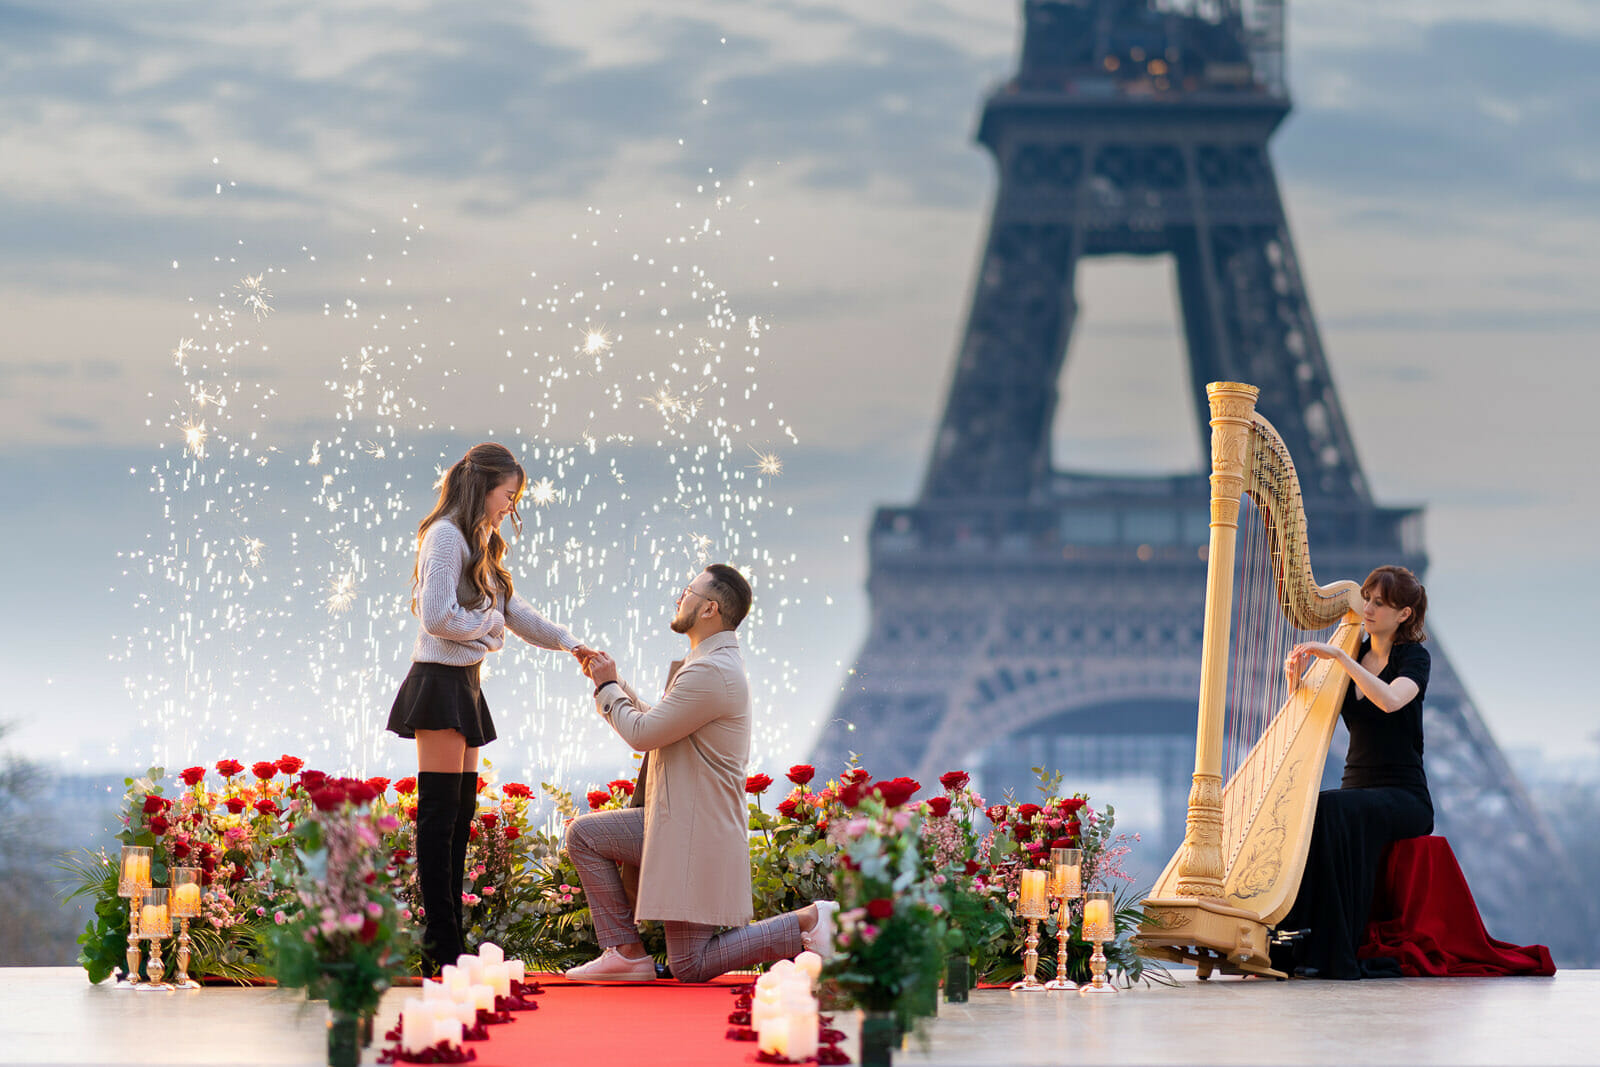 Epic Eiffel Tower Marriage Proposal at Trocadero Paris